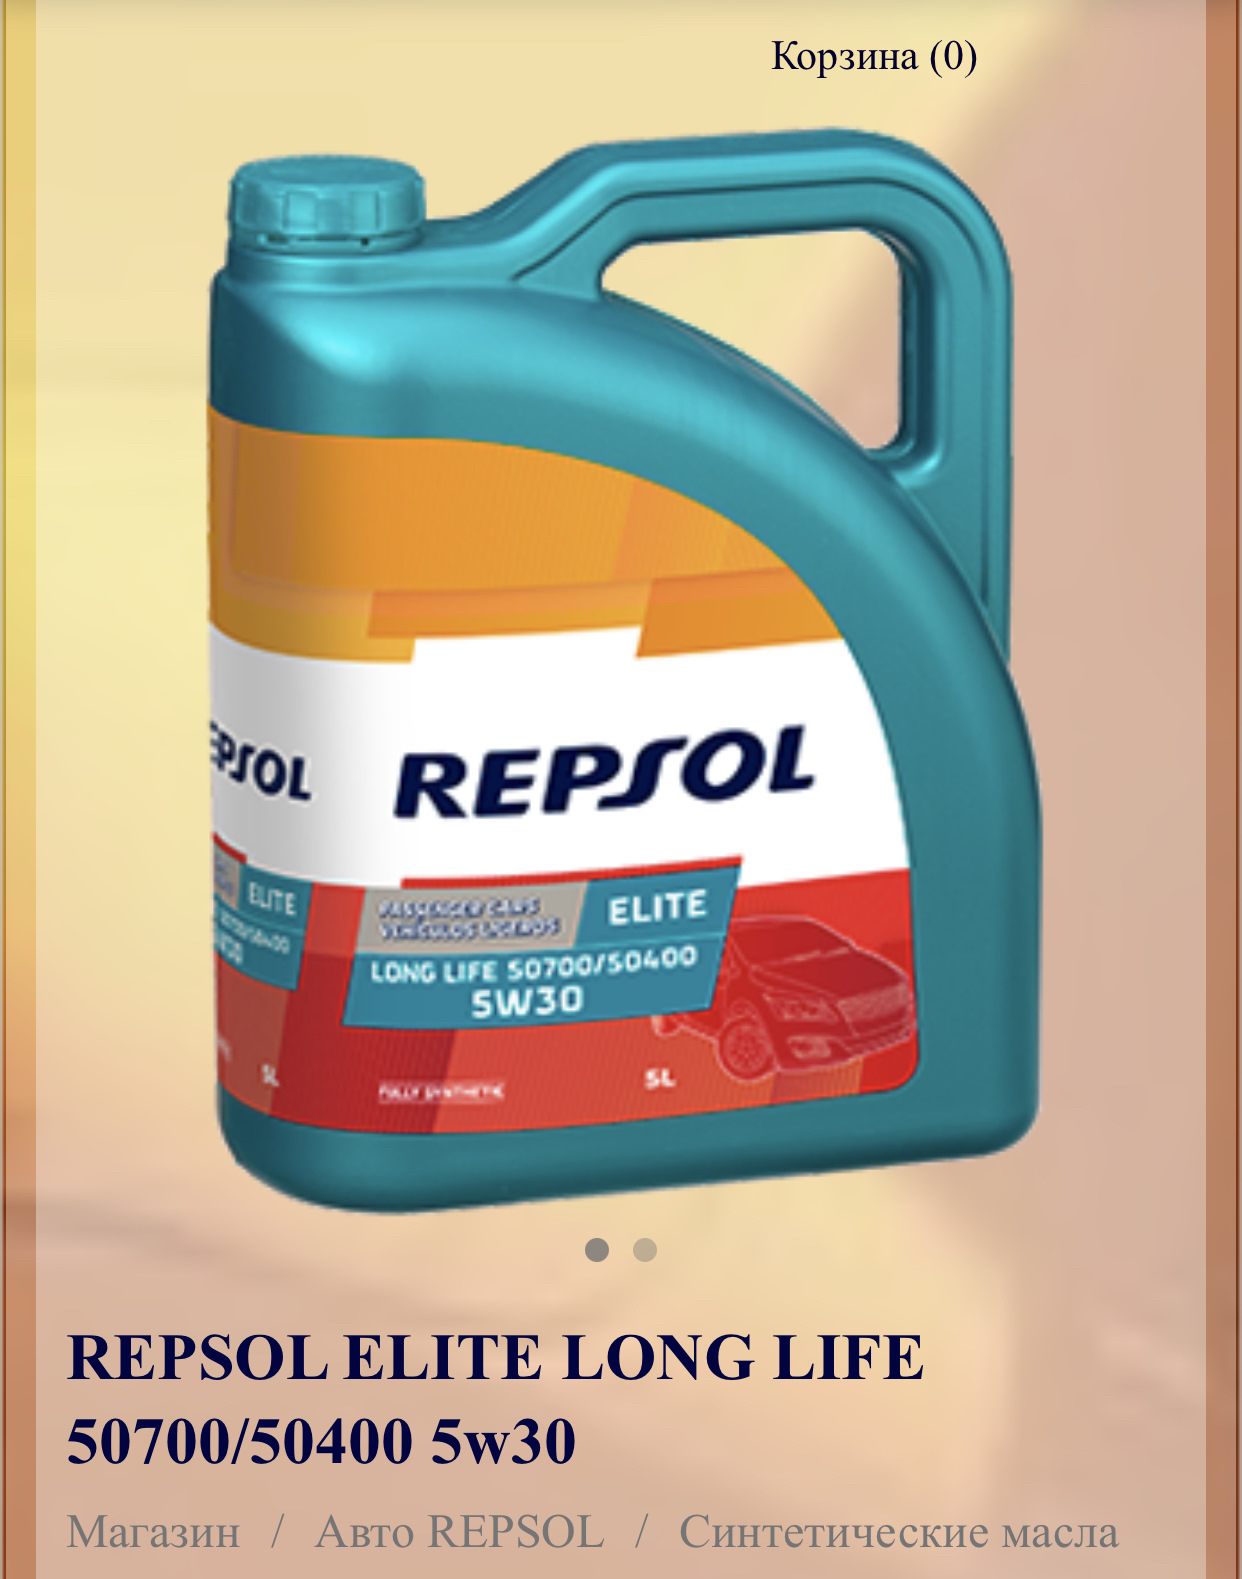 Масла repsol 5w 30. Repsol Elite long Life 50700/50400 5w30. Repsol Evolution long Life 5w30. Repsol Evolution 5w30. Repsol 5w30 504.